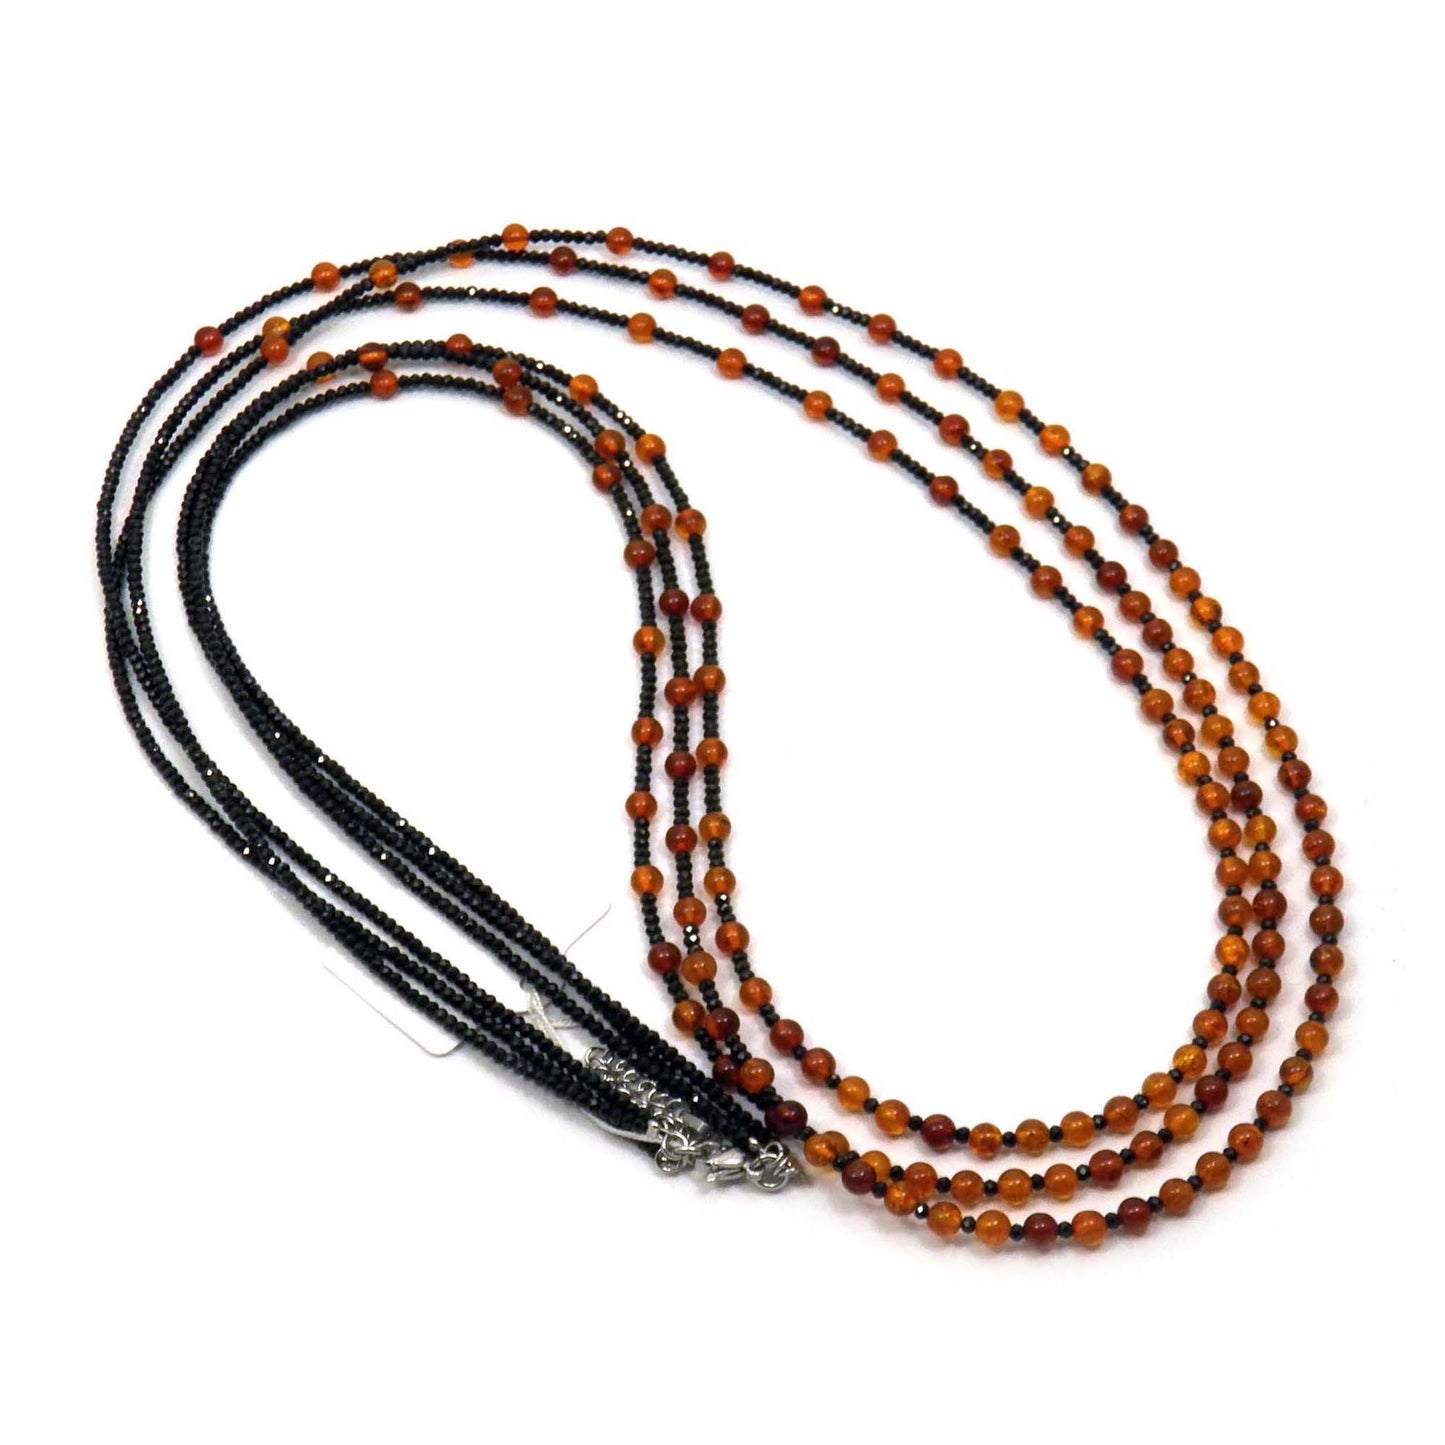 Three strands of gemstone bead necklace long